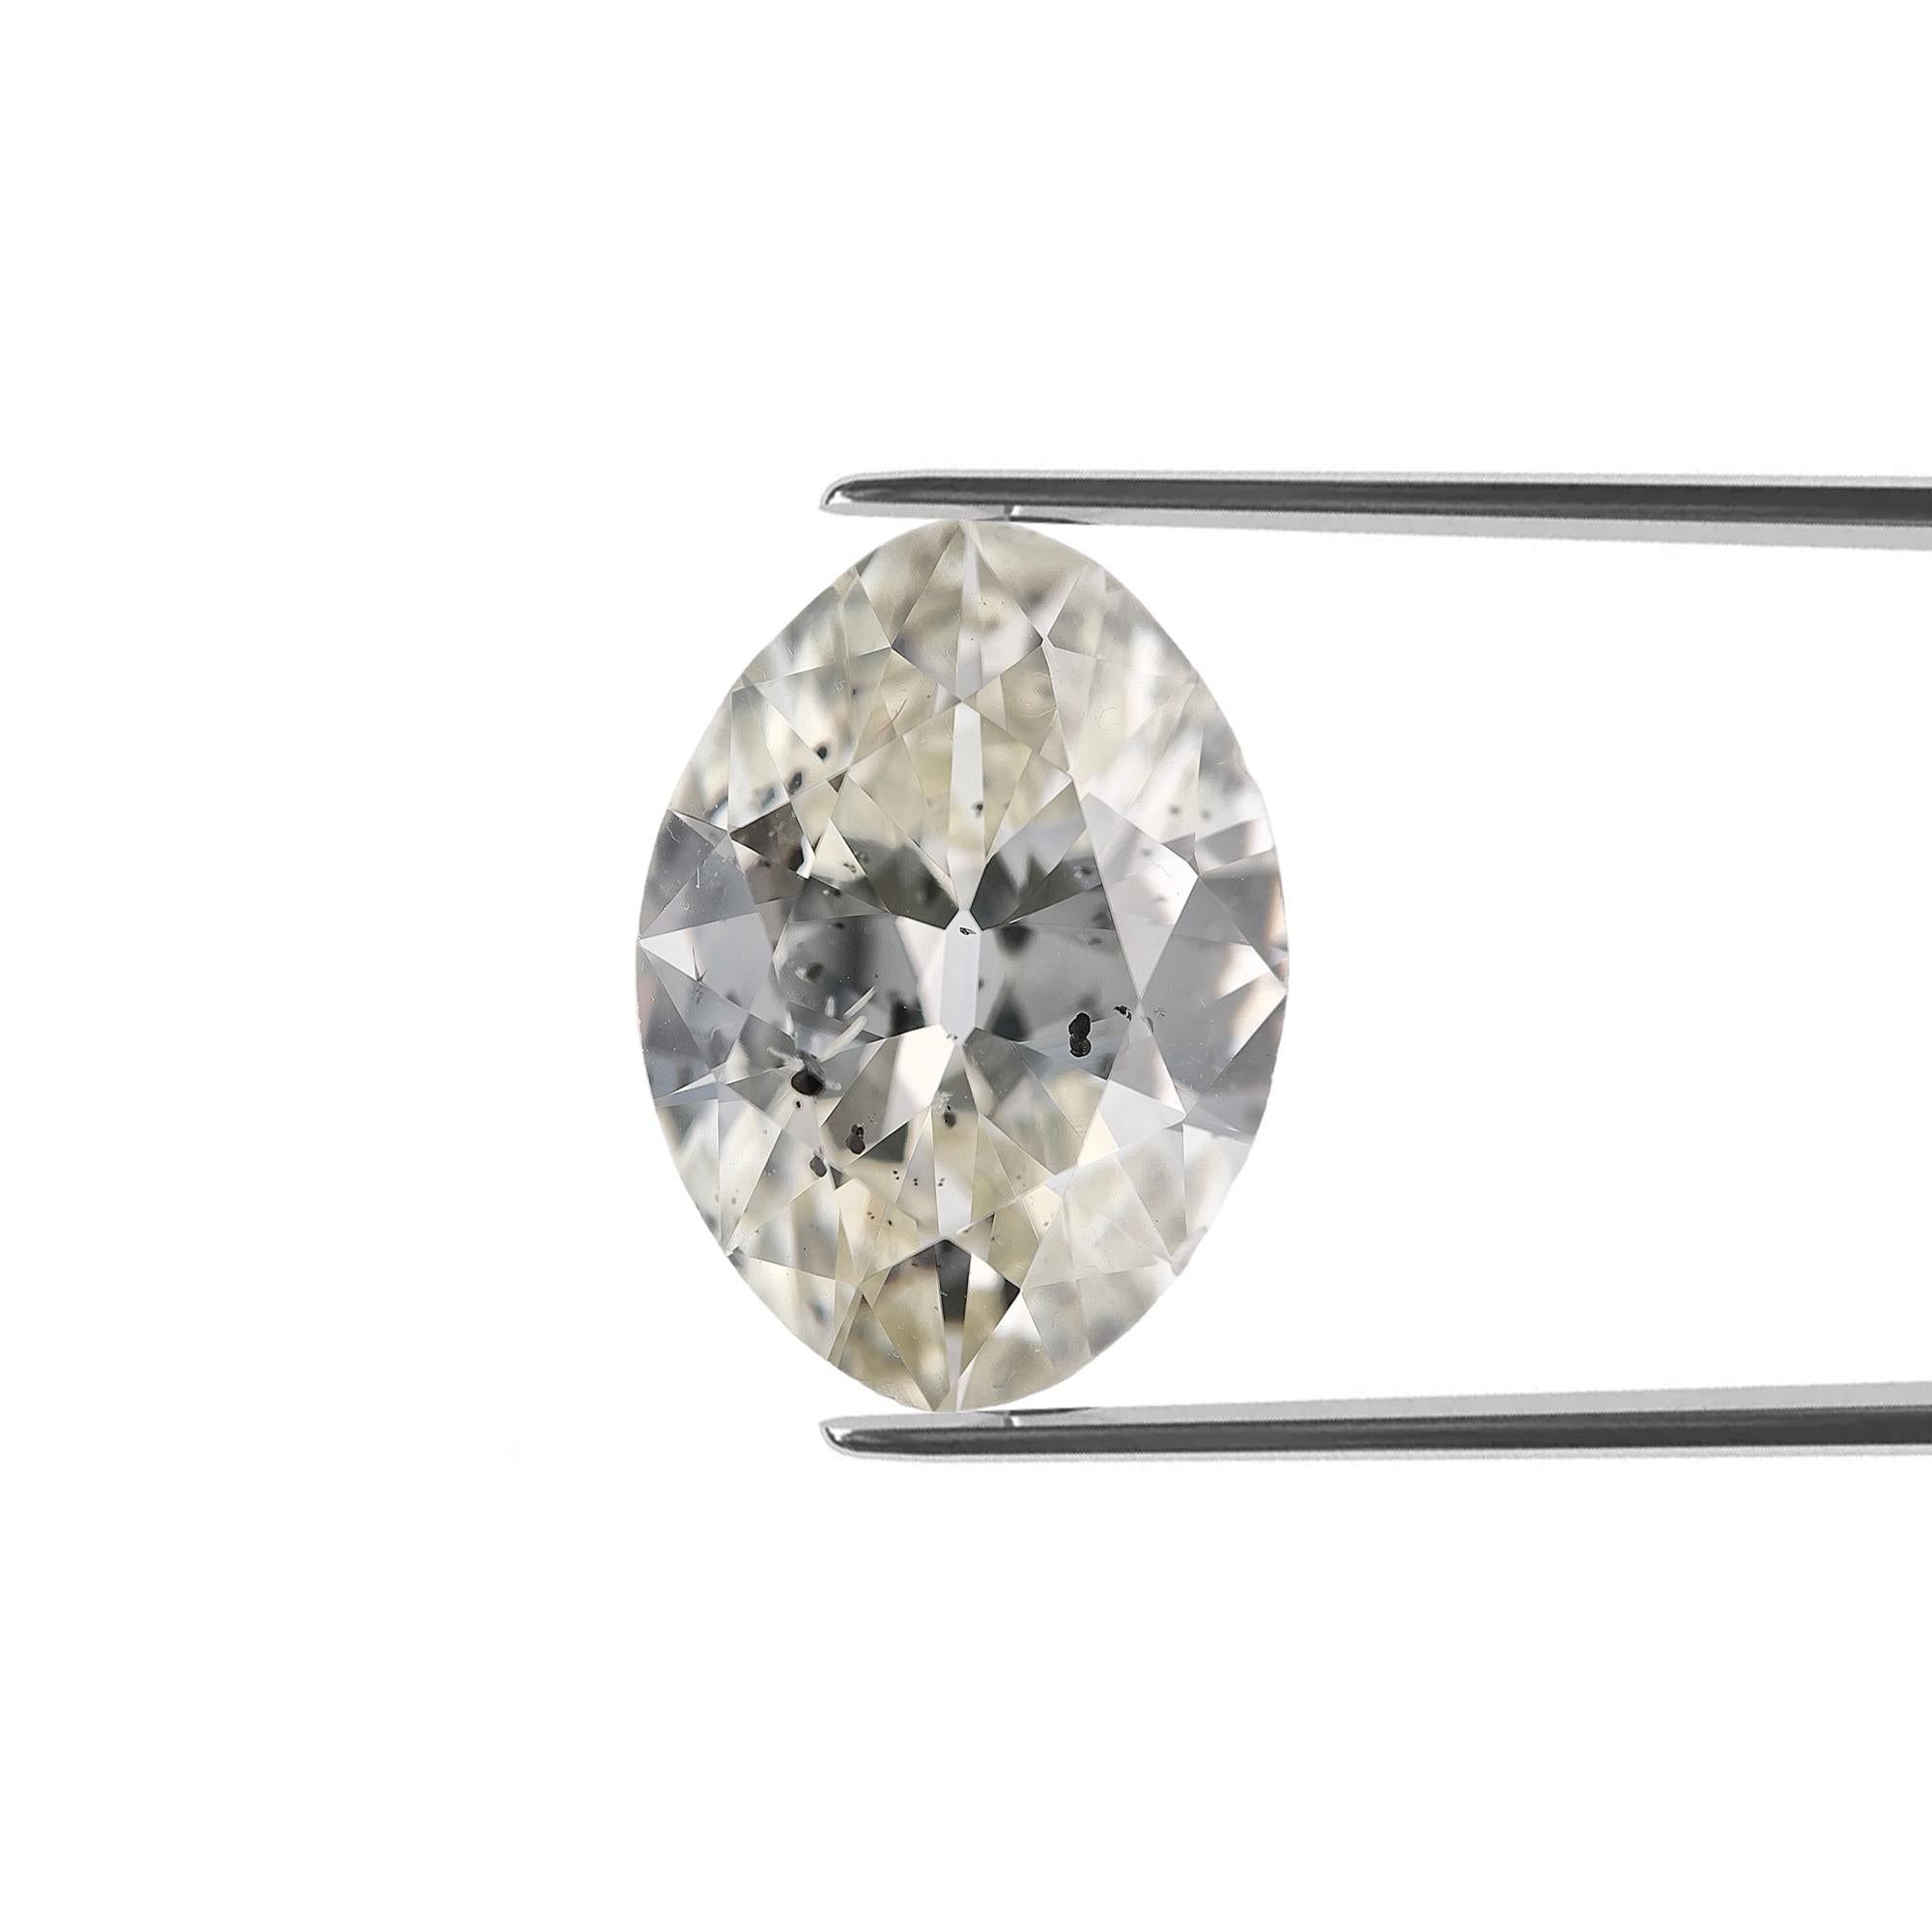 ITEM DESCRIPTION

ID #:57338
Stone Shape:Oval Brilliant
Diamond Weight:12.32 carat
Clarity:I1
Color:M
Cut:
Measurements:18.76 x 13.99 x 7.67 mm
Depth %:54.8%
Table %:55%
Symmetry:Good
Polish:Good
Fluorescence:Faint
Certifying Lab:GIA
GIA Certificate